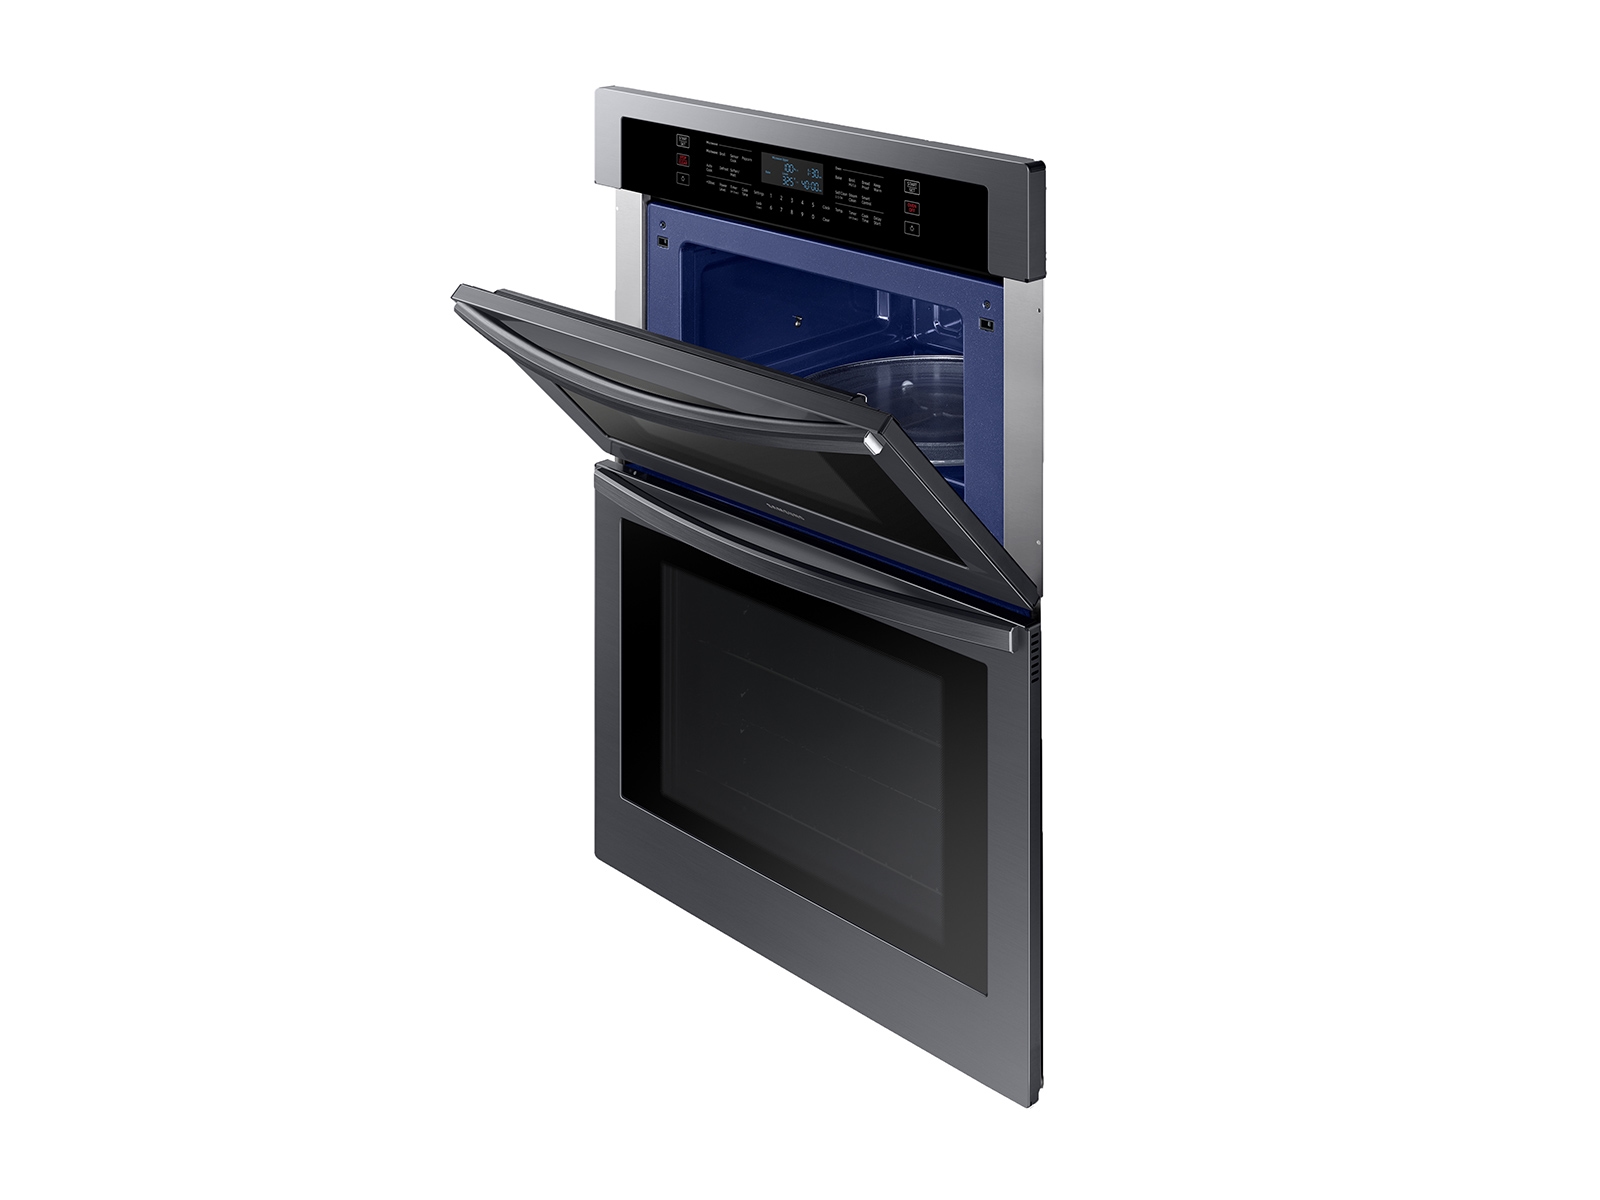 smart wall oven microwave combo